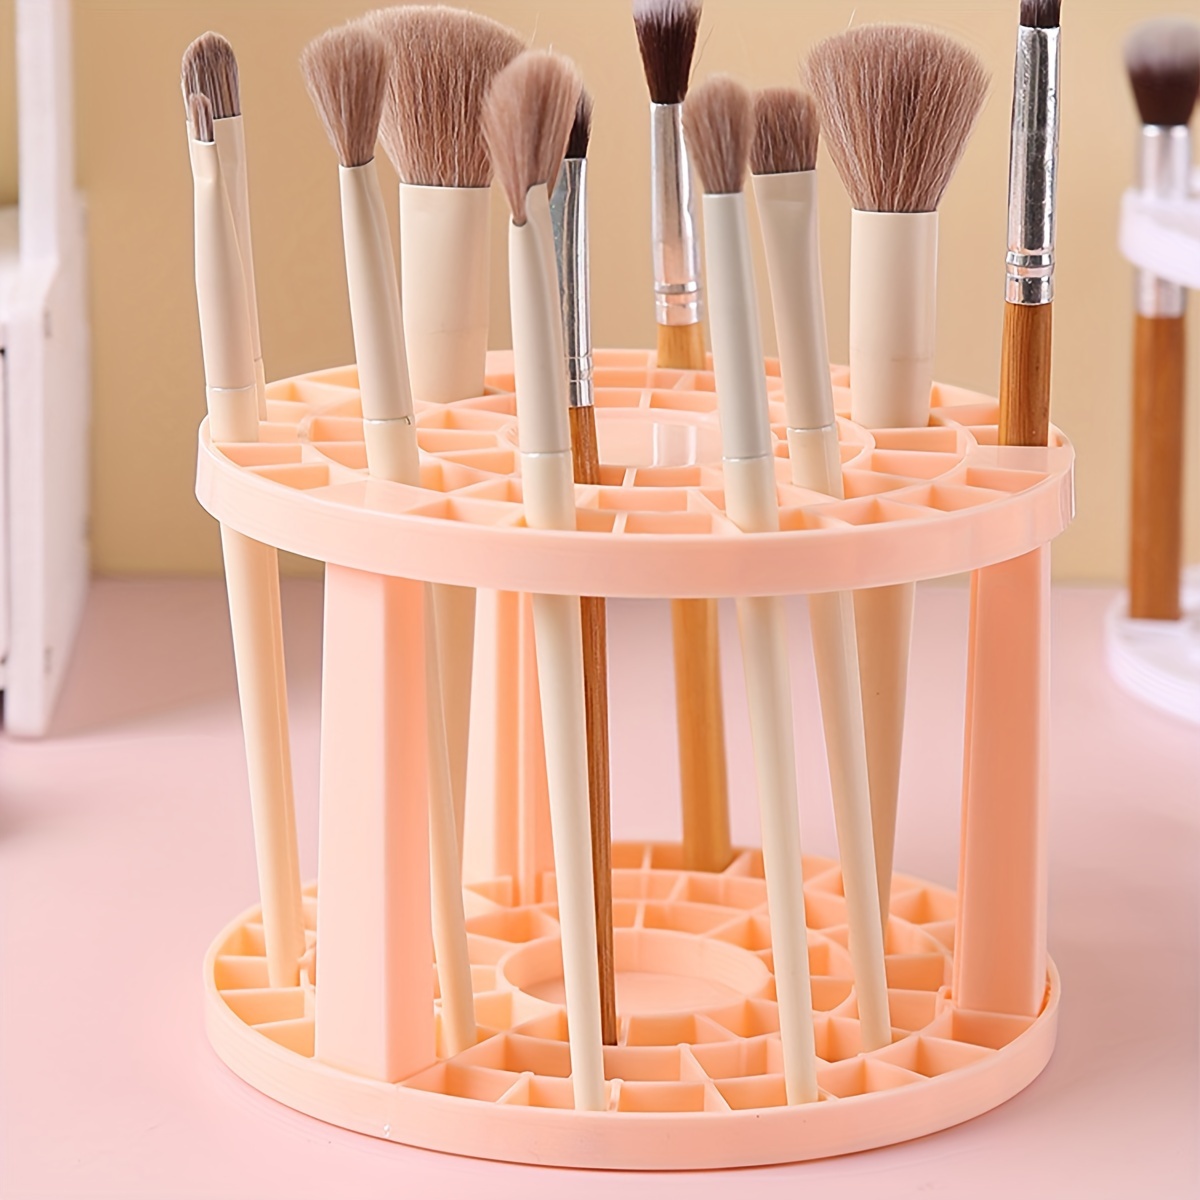 Makeup Brush Holder Multi-functional Round makeup organizer for